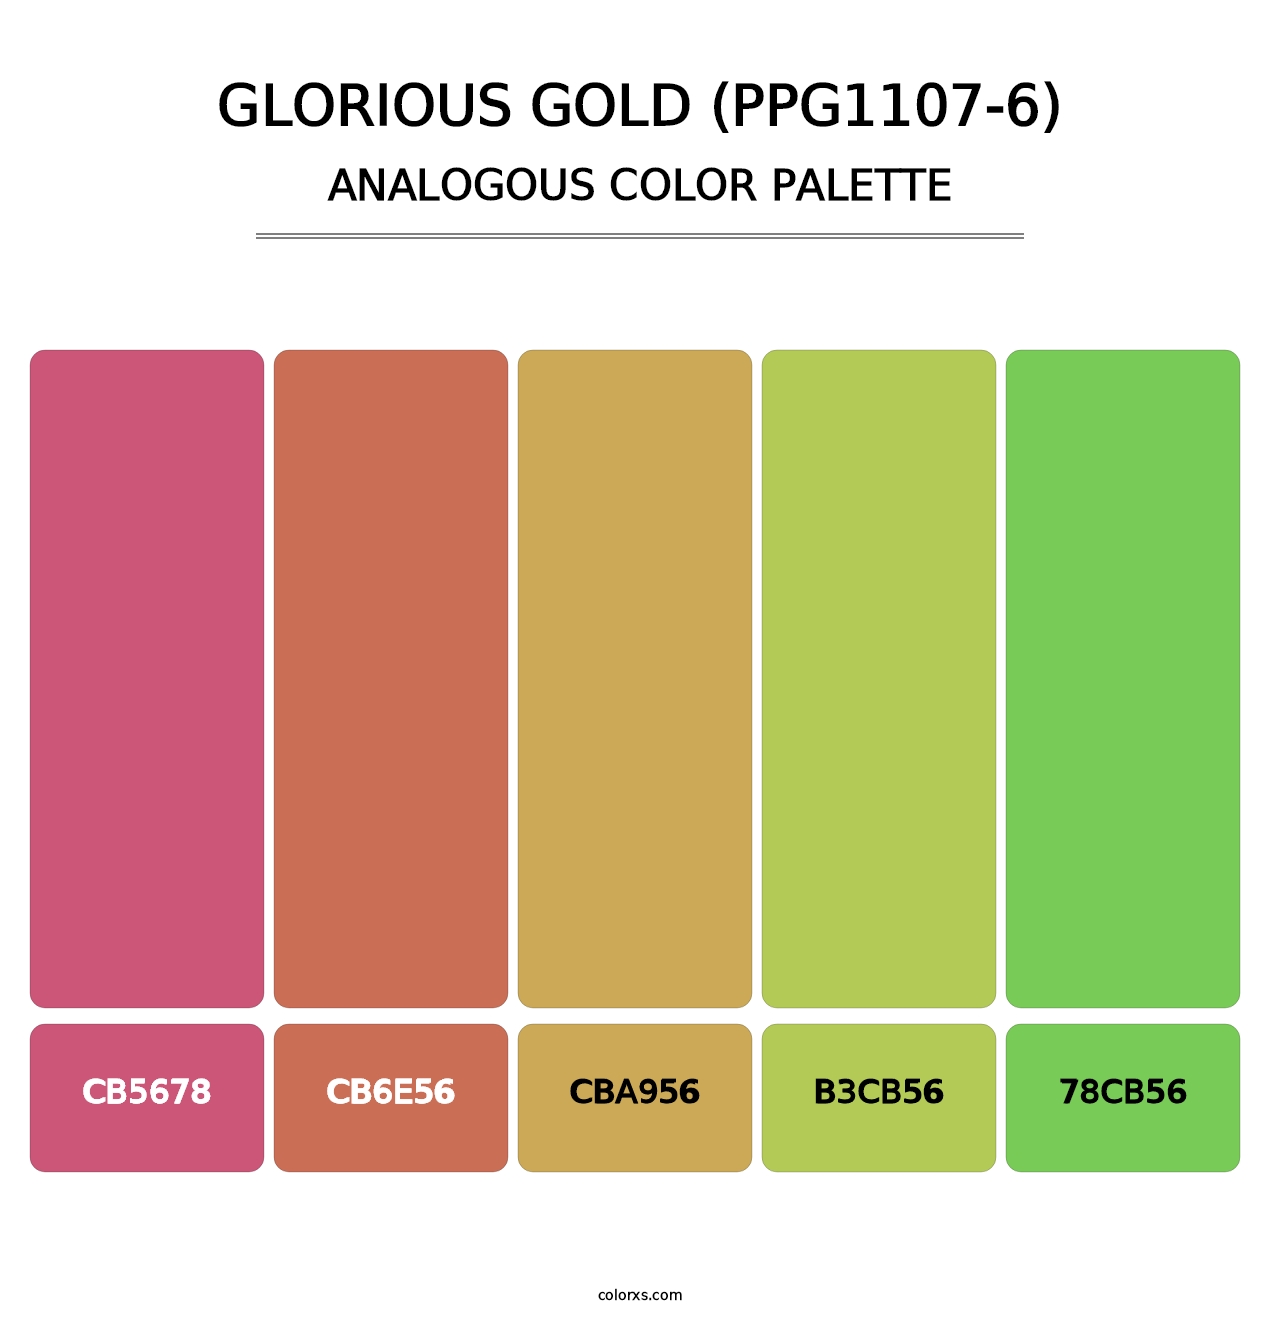 Glorious Gold (PPG1107-6) - Analogous Color Palette